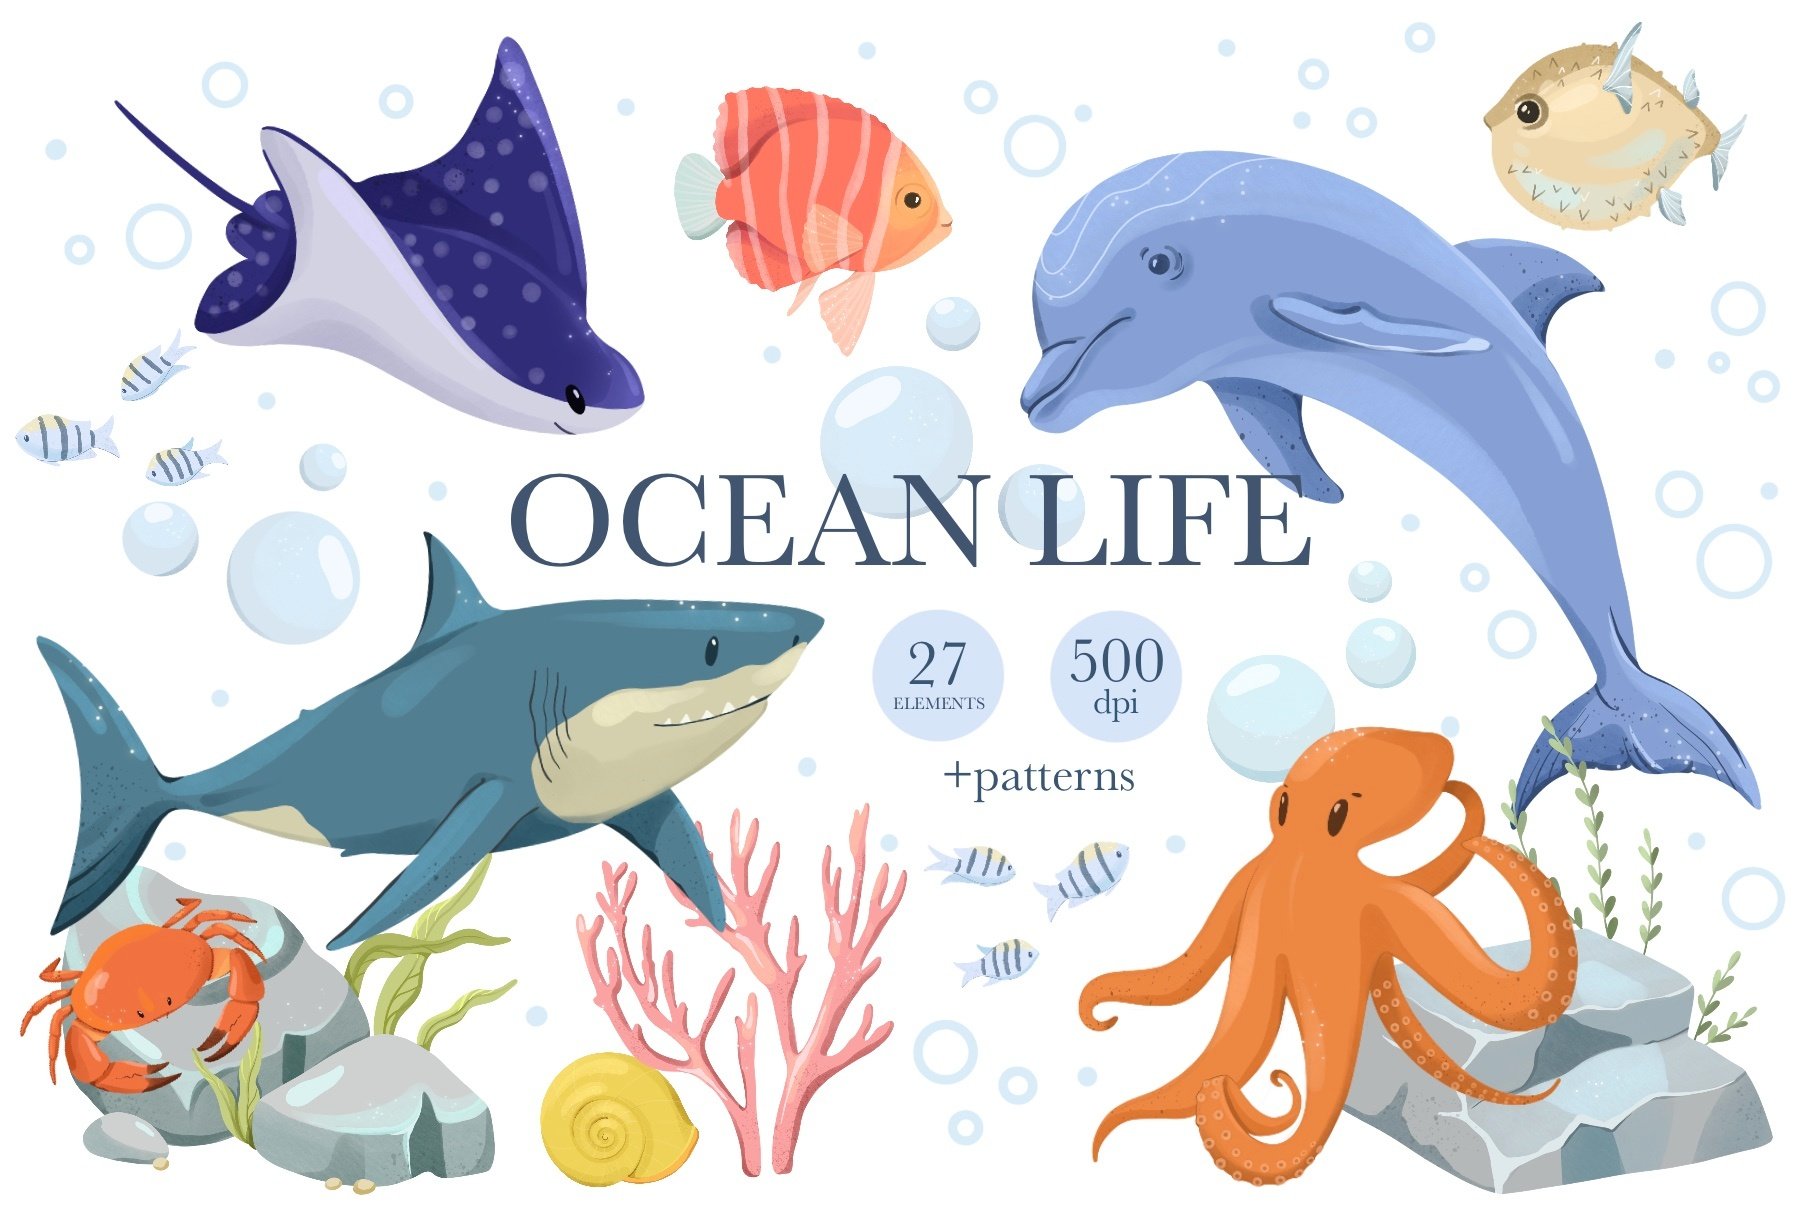 clip art ocean animals